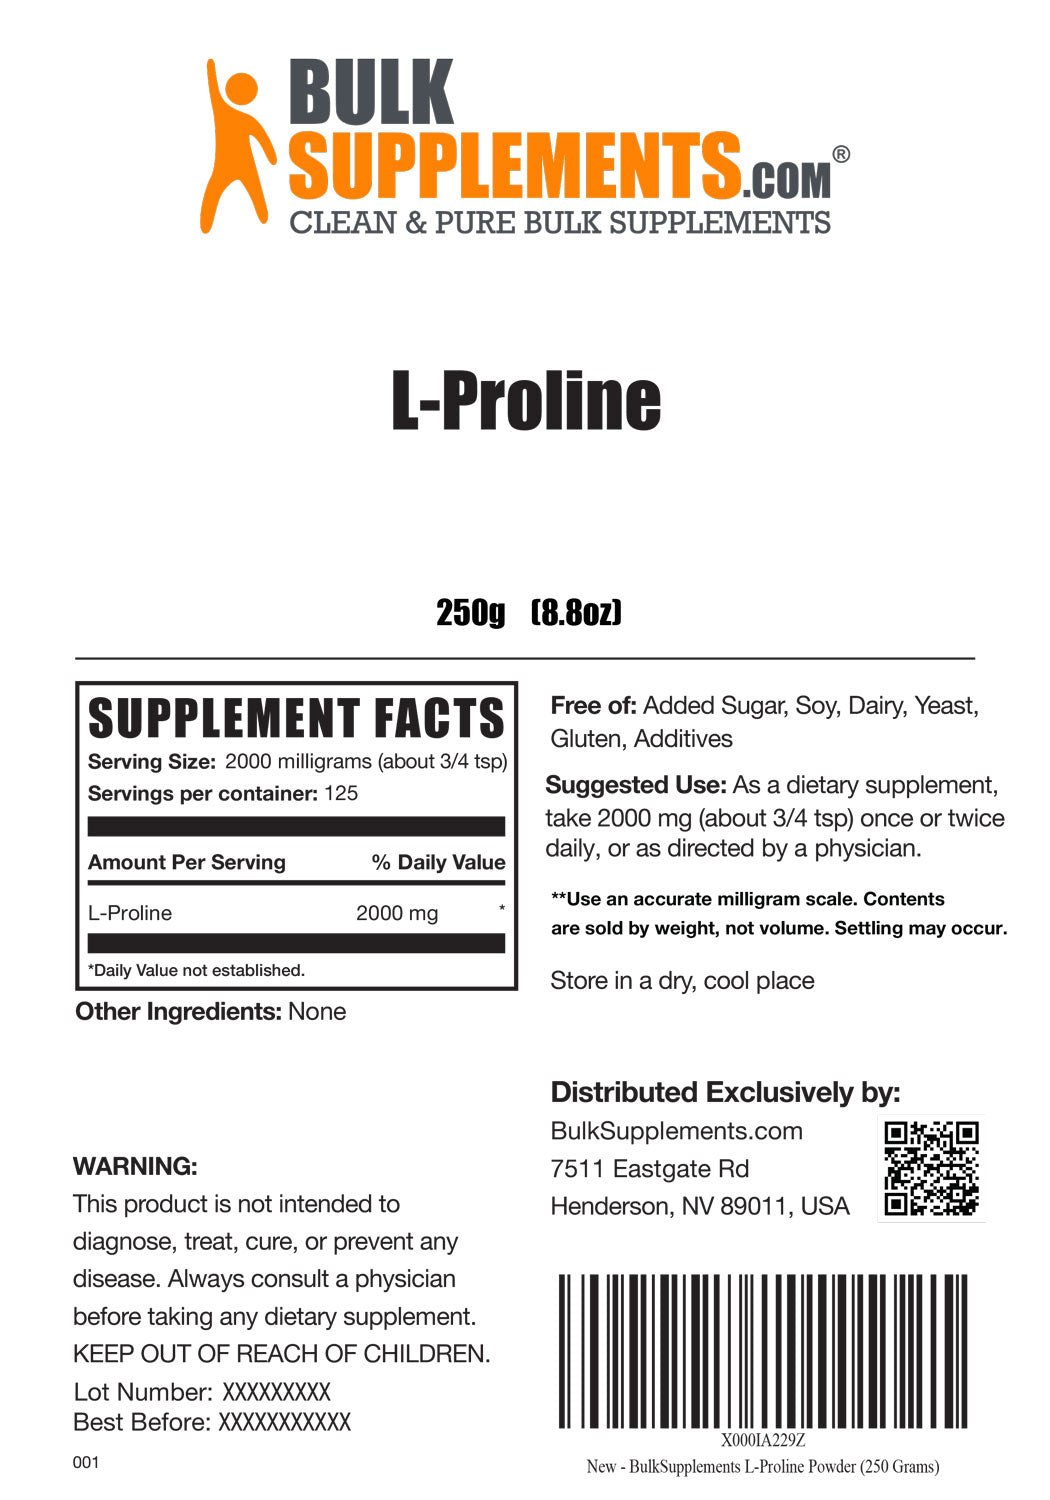 L-Proline powder label 250g